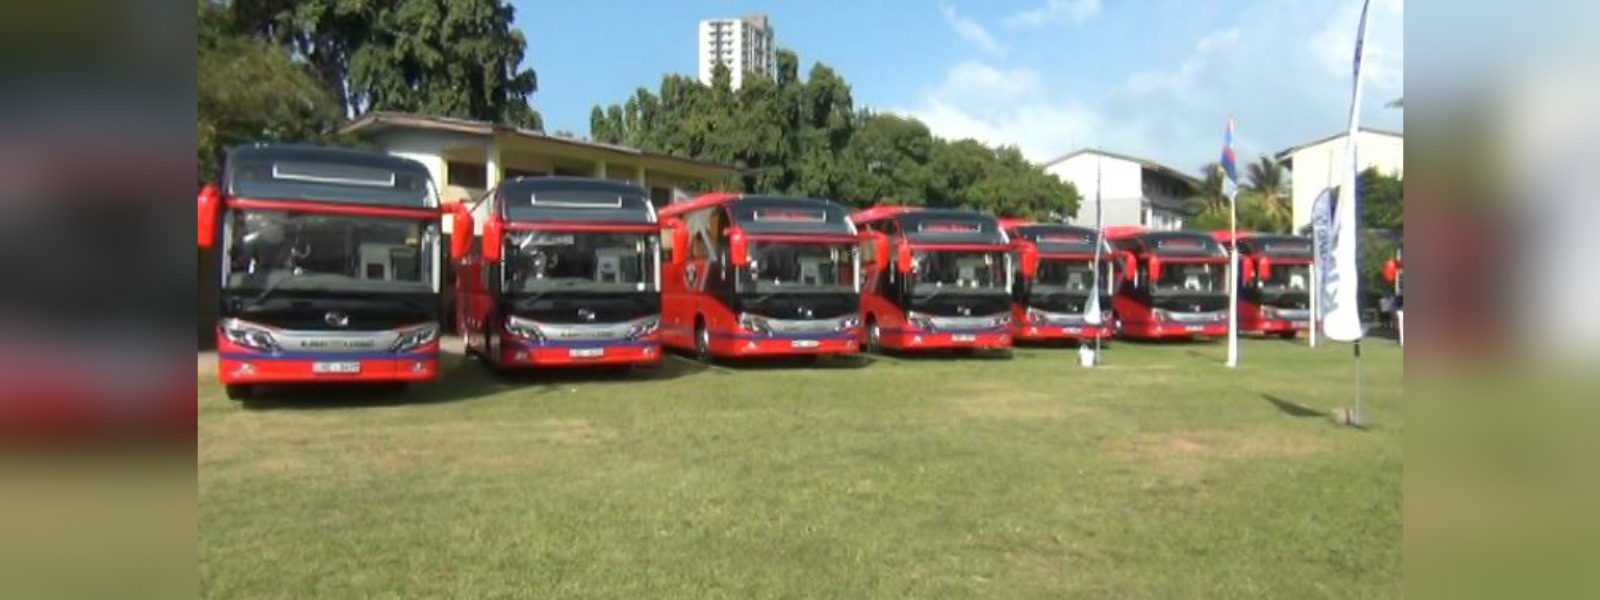 Sri Lanka Transport Board receives 9 luxury buses